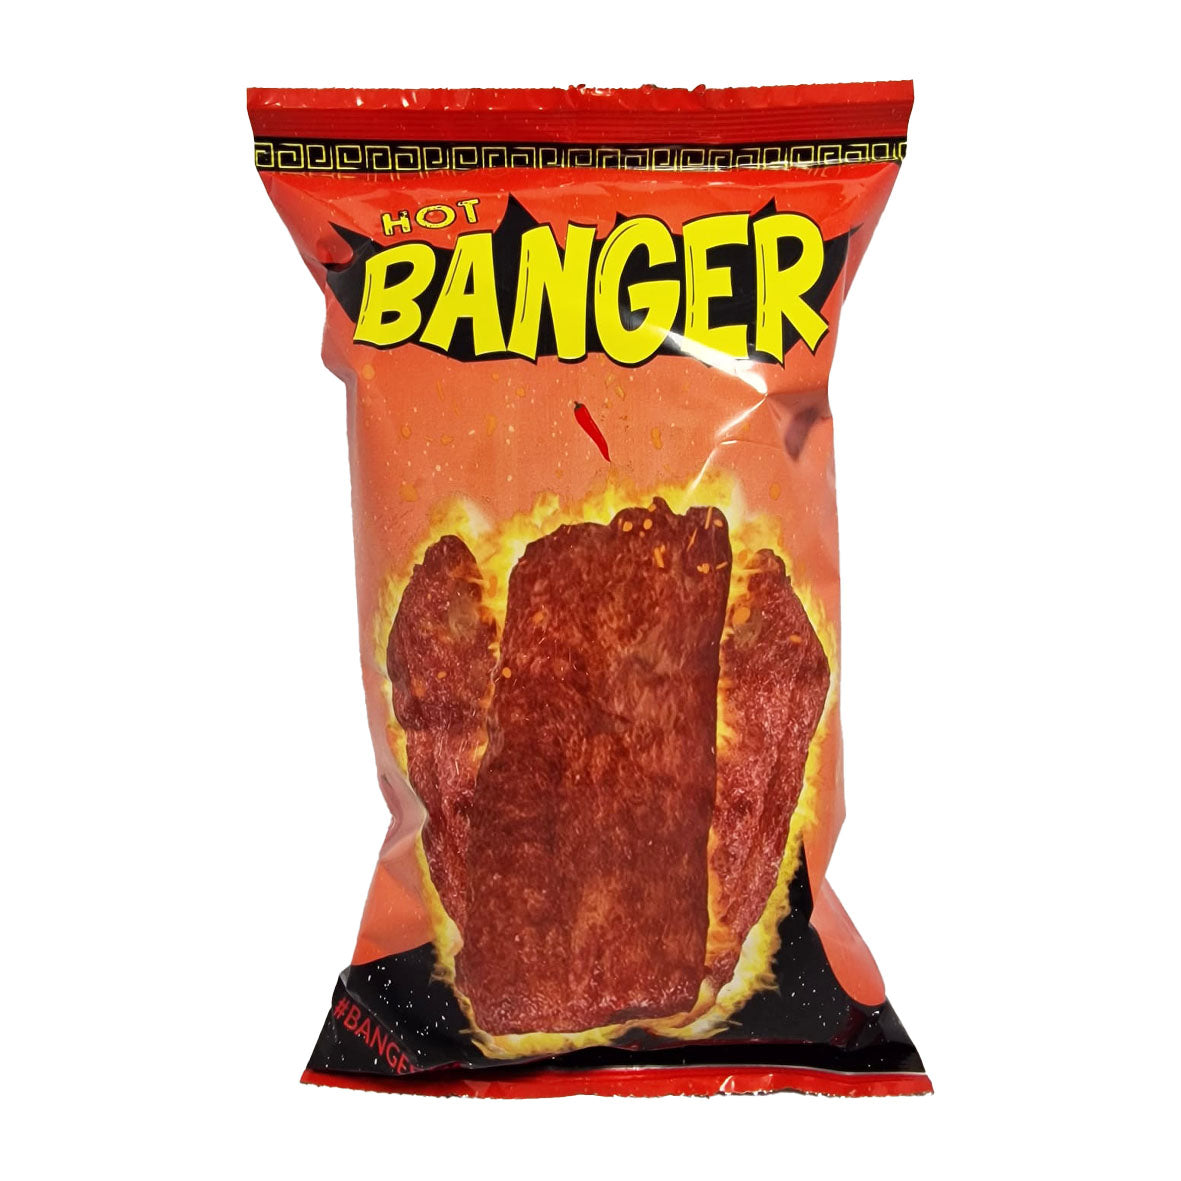 Banger - Hot Banger 90g